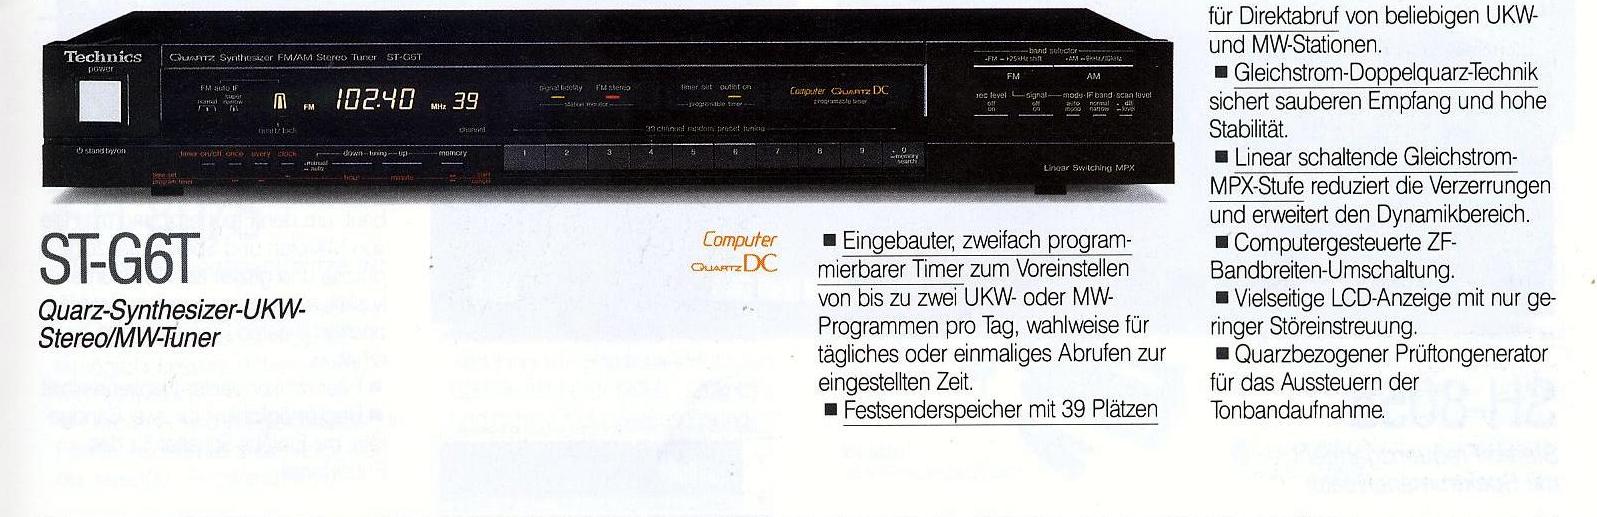 Technics ST-G 6 T-Prospekt-1988.jpg